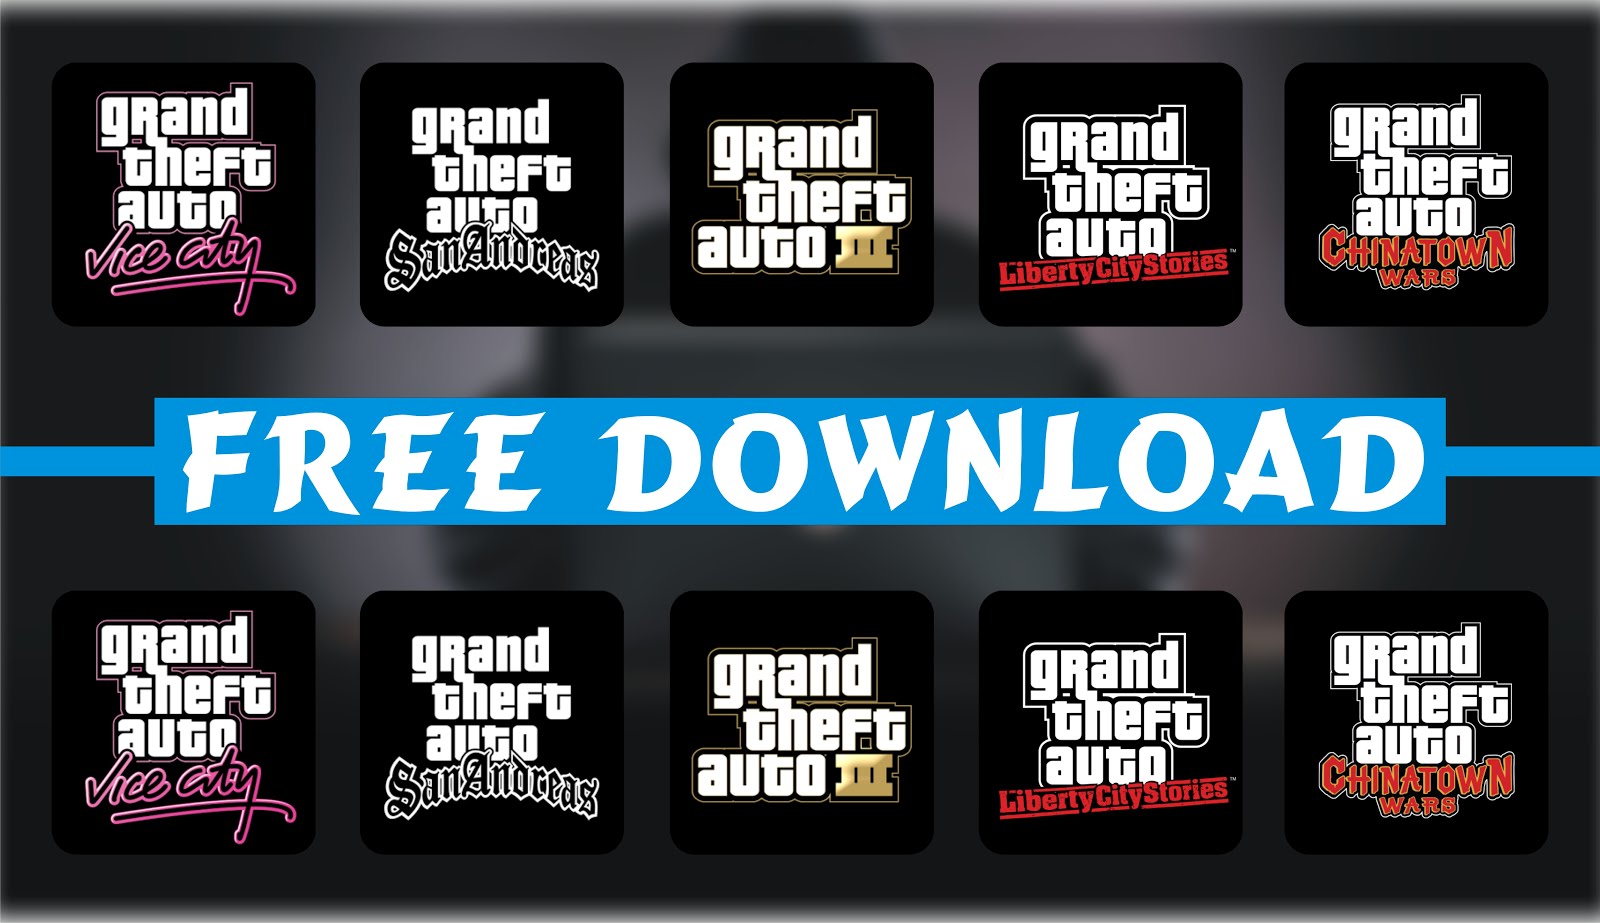 Gta games free download game top games